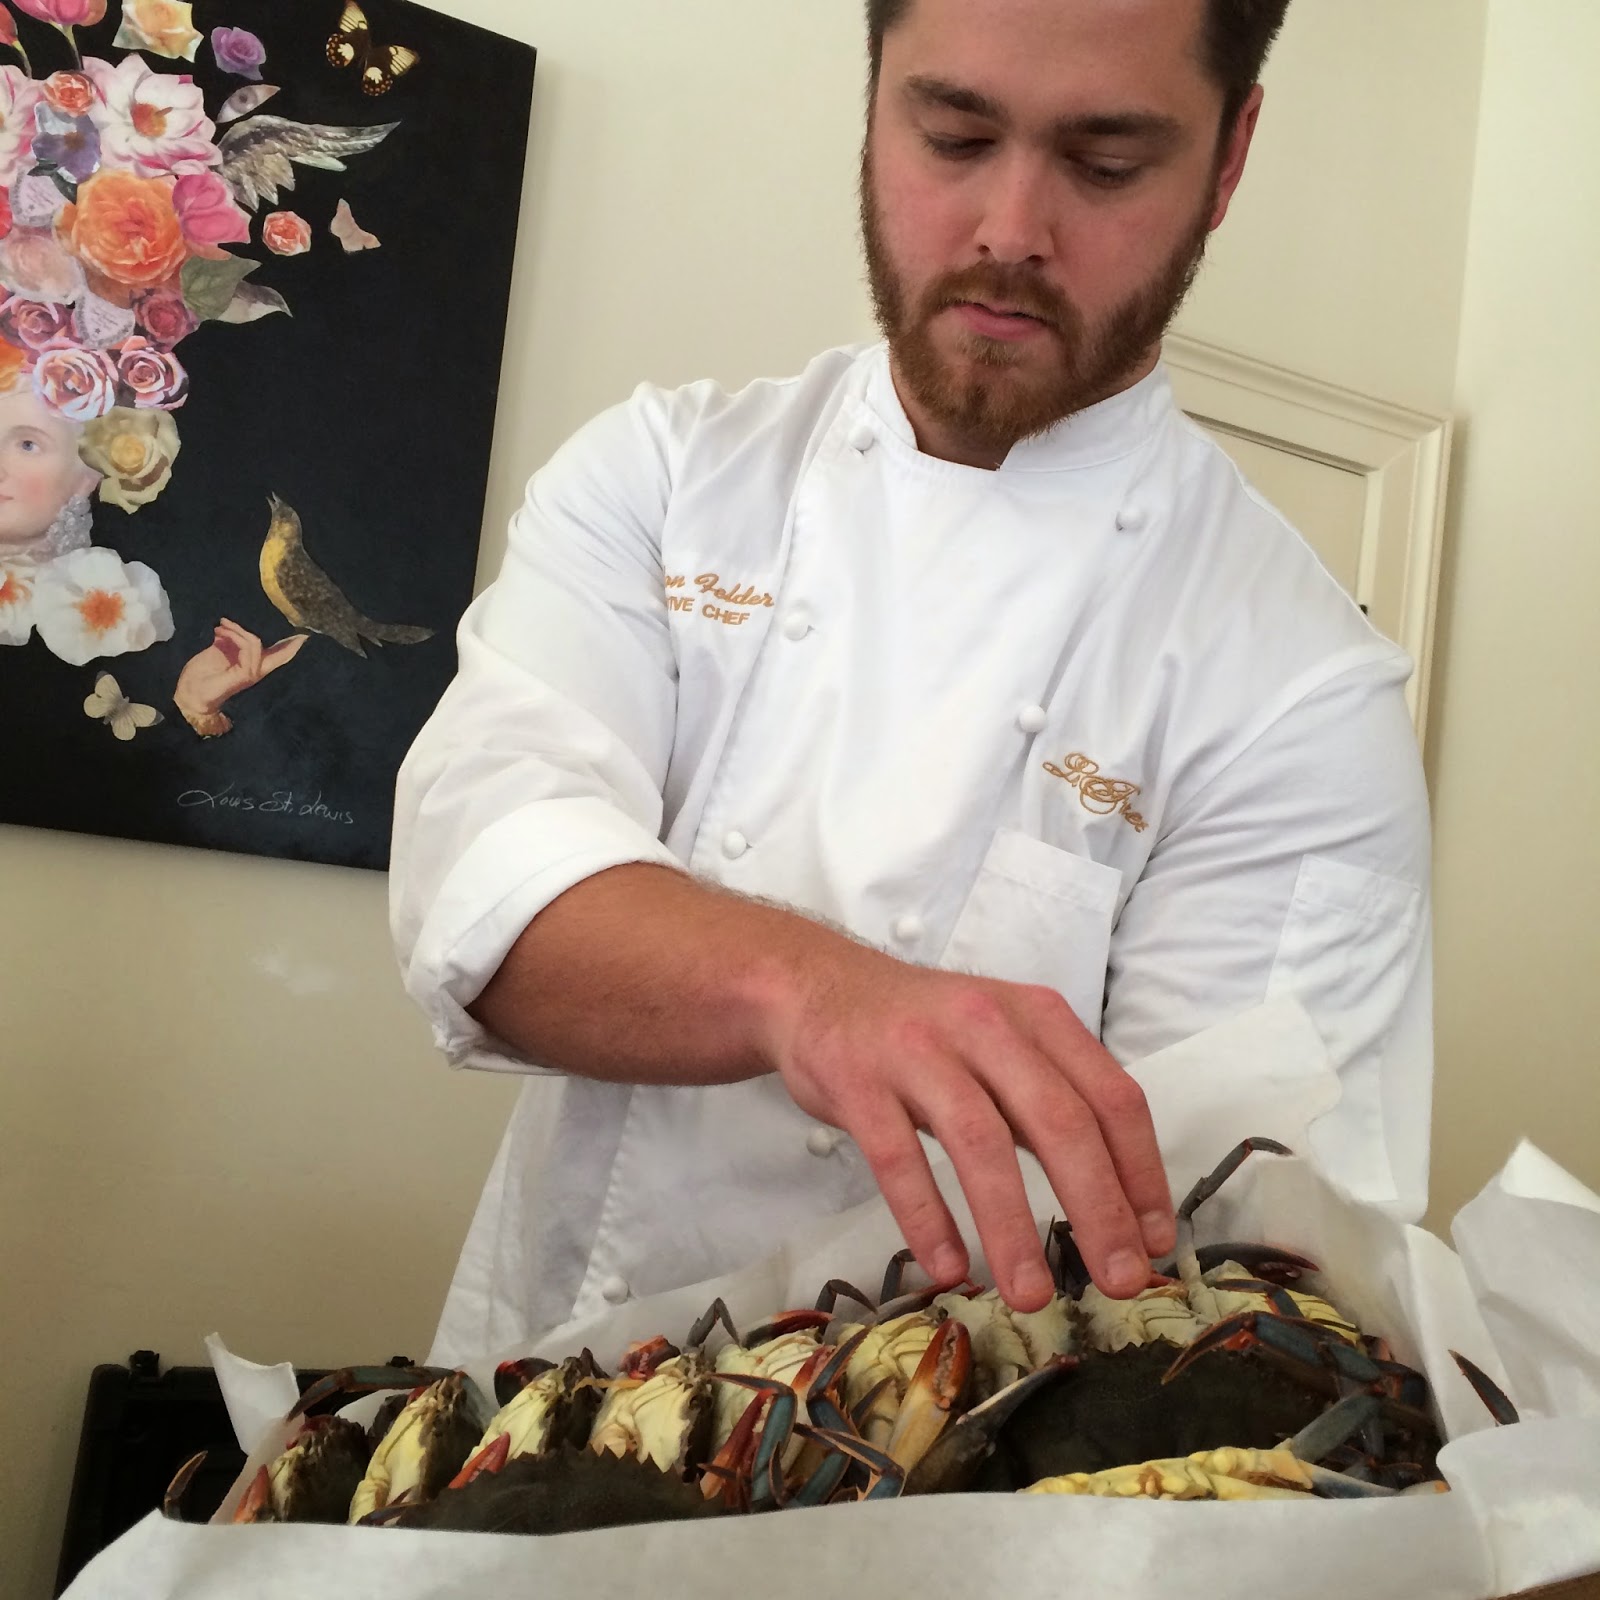 Chef Felder showing off the fresh soft shell crab